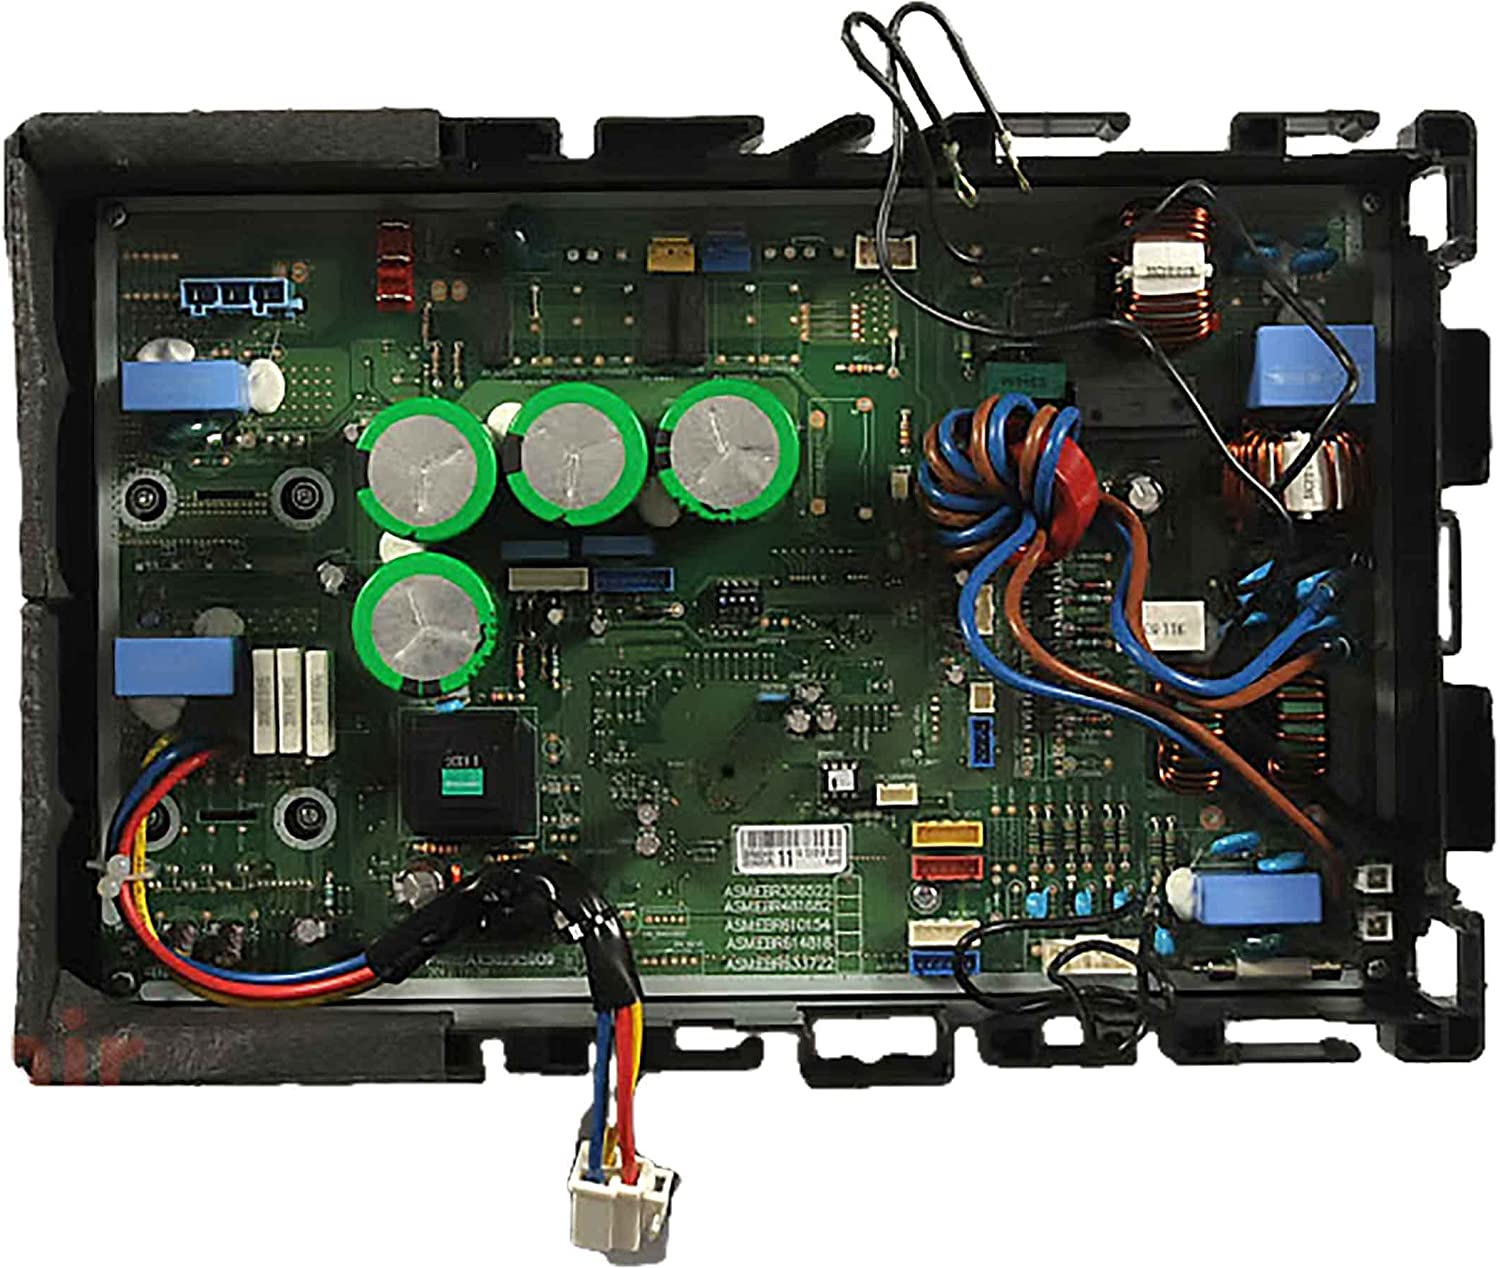 LG Genuine OEM EBR68349111 Air Conditioner Power Control Board - image 1 of 1